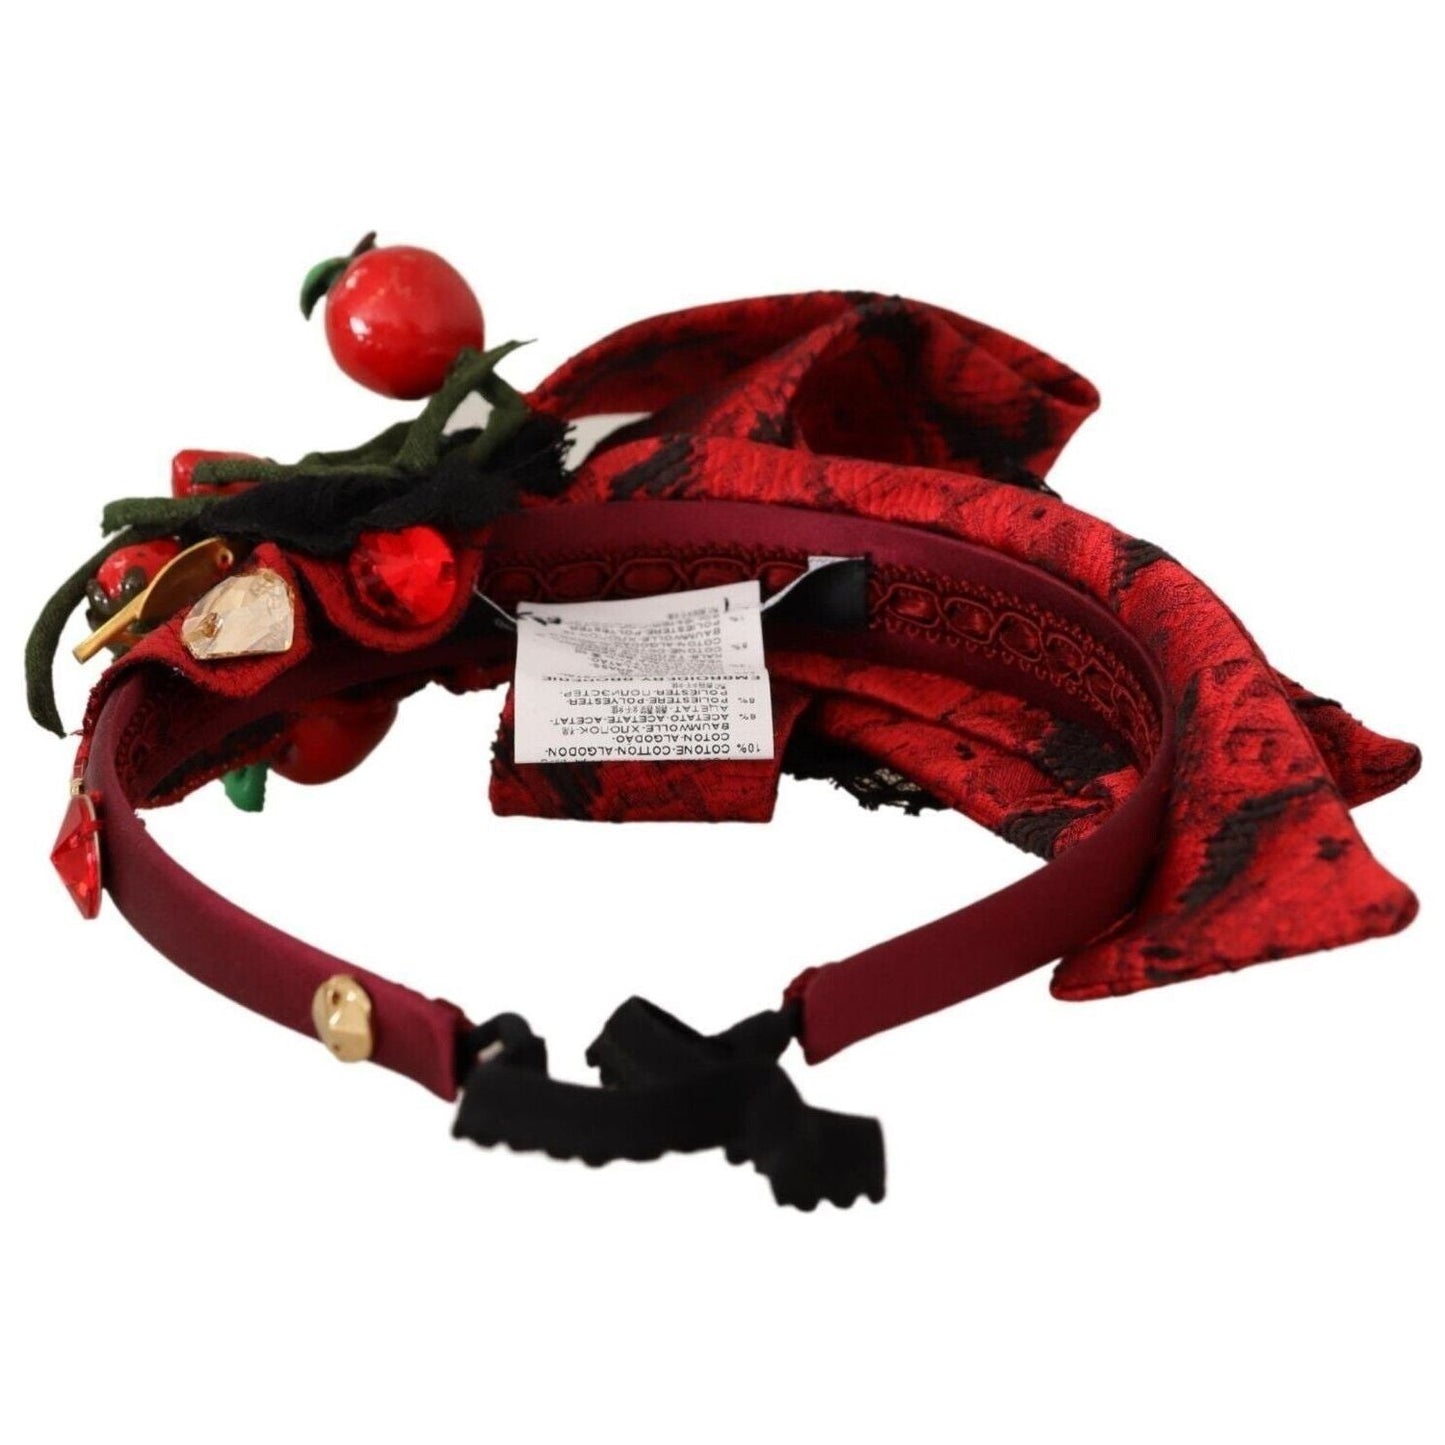 Dolce & Gabbana Exquisite Berry Crystal Embellished Diadem red-tiara-berry-fruit-crystal-bow-hair-diadem-headband s-l1600-3-198-416c24ef-bbf.jpg